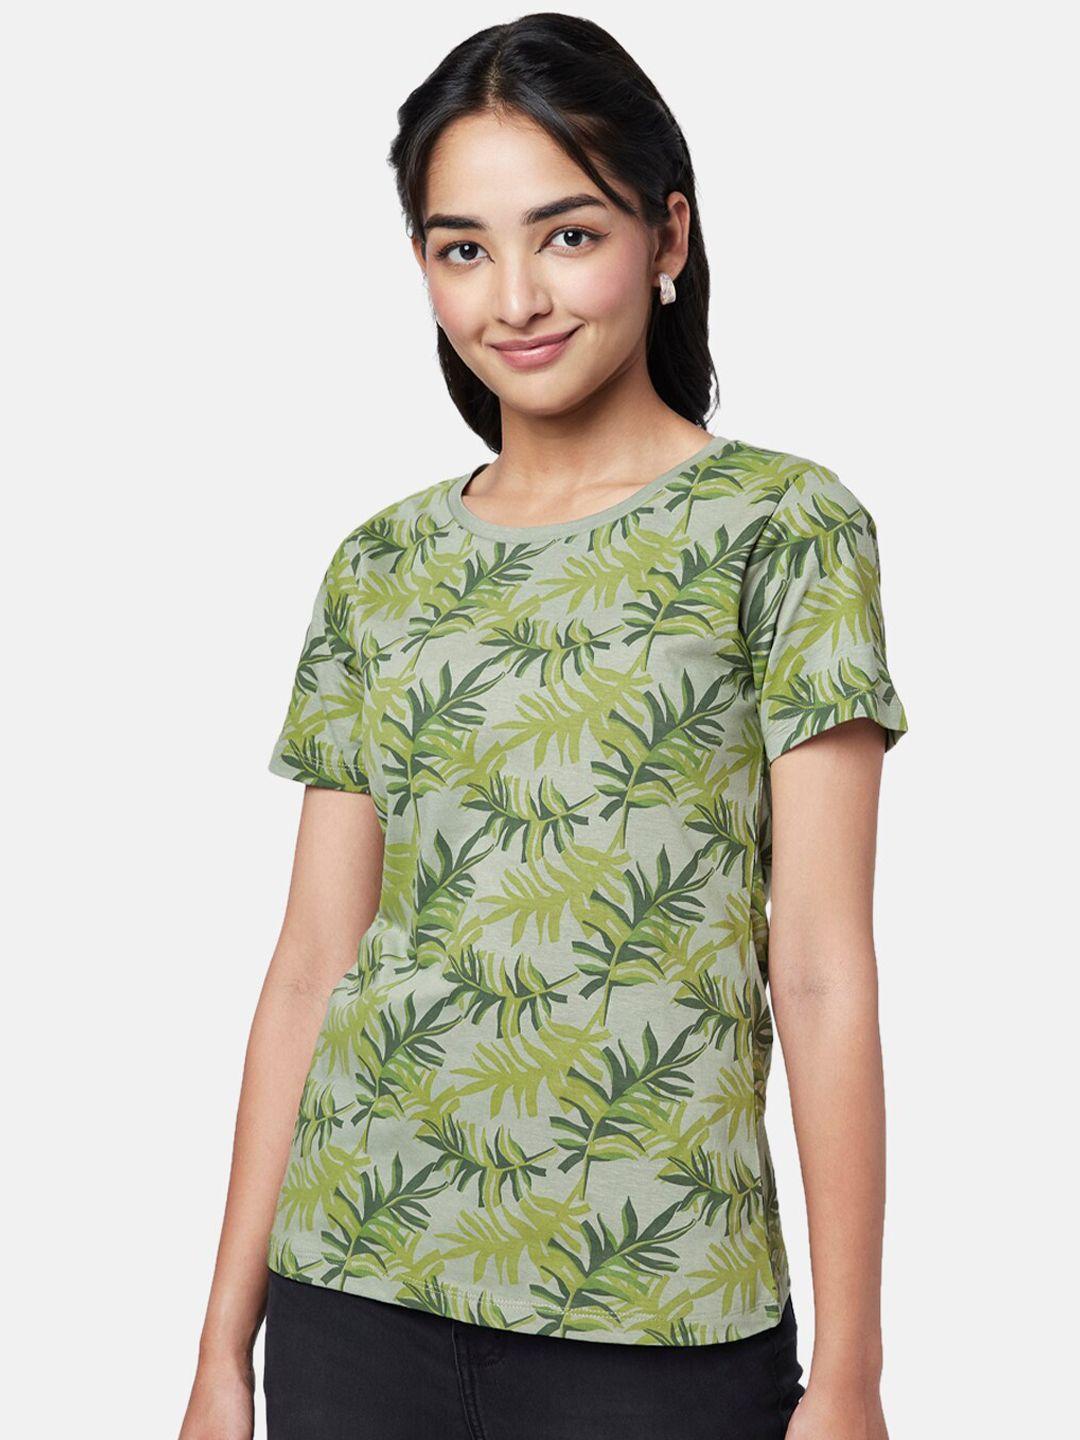 yu-by-pantaloons-women-tropical-printed-cotton-t-shirt